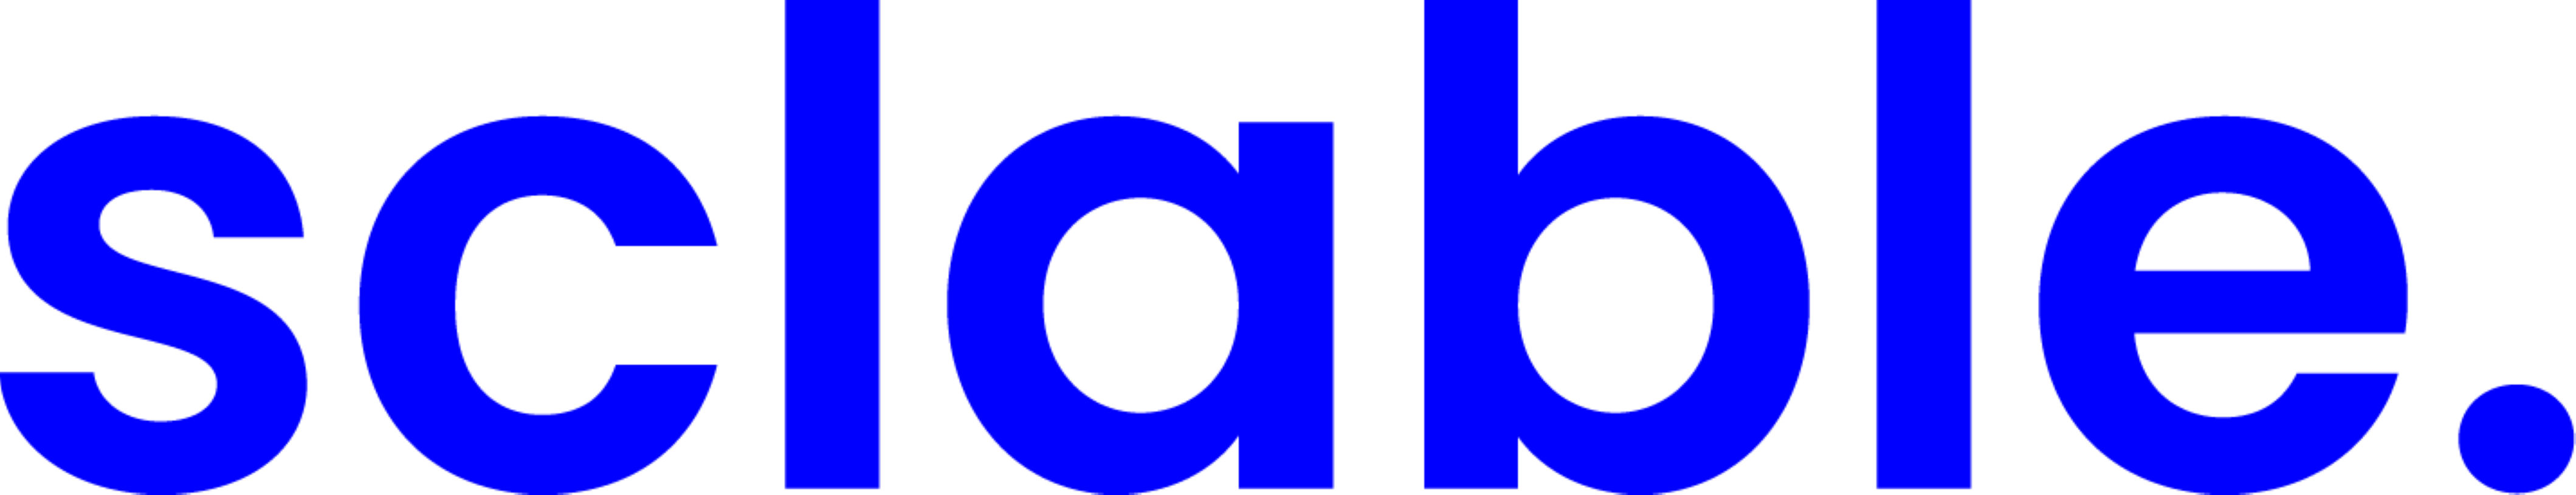 Sclablle logo